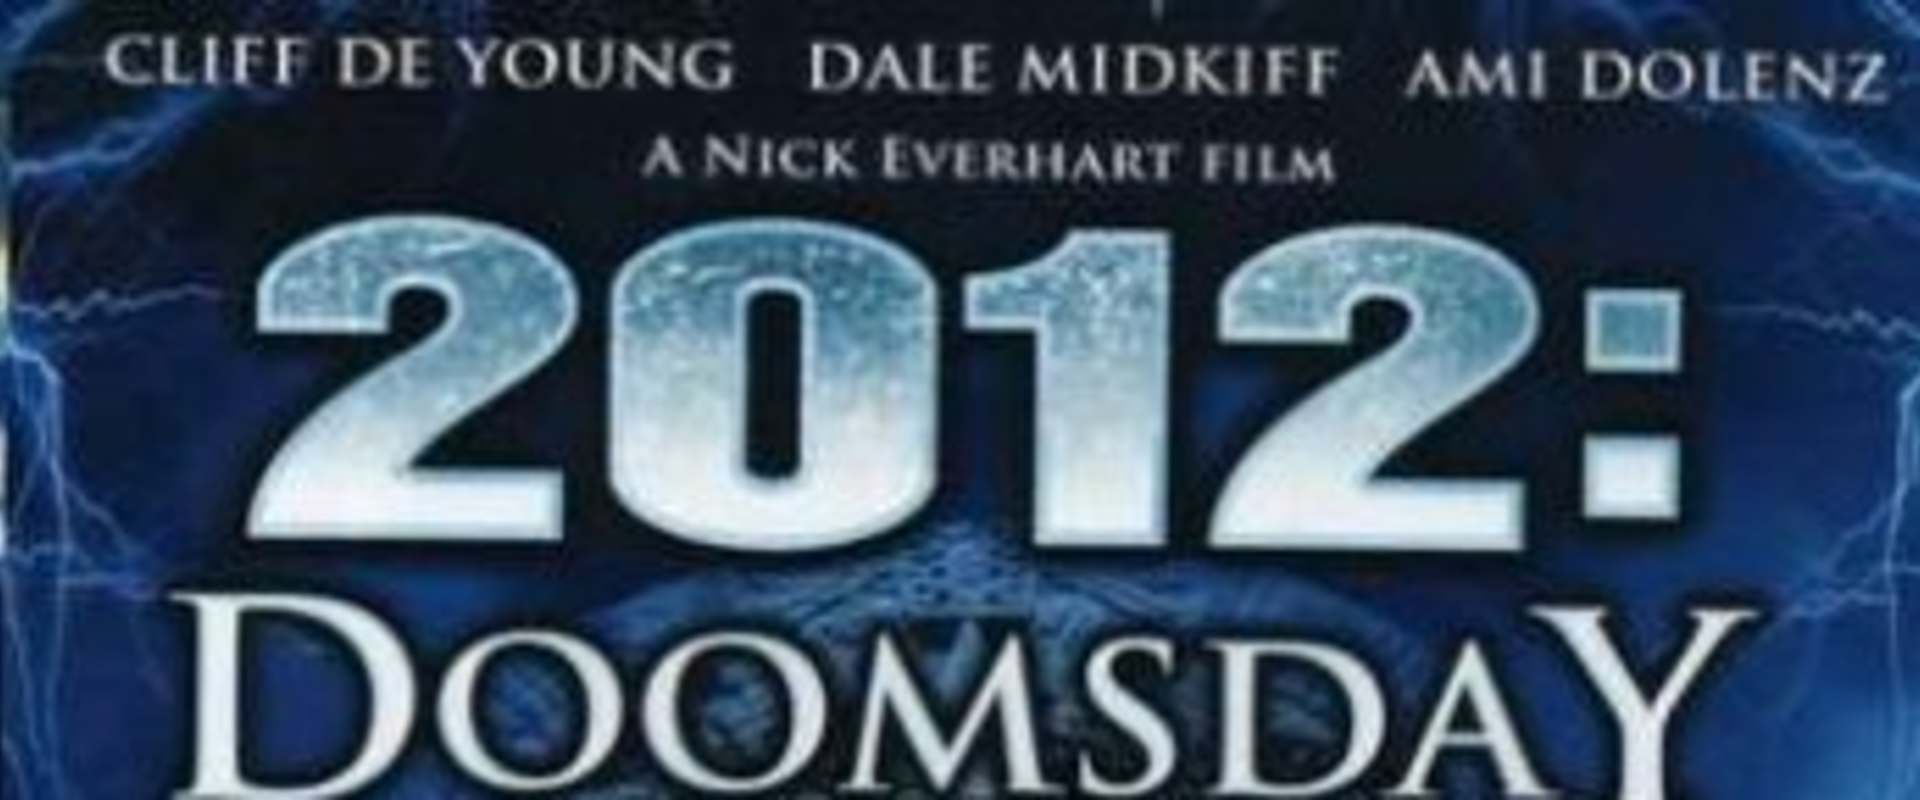 2012 Doomsday background 2